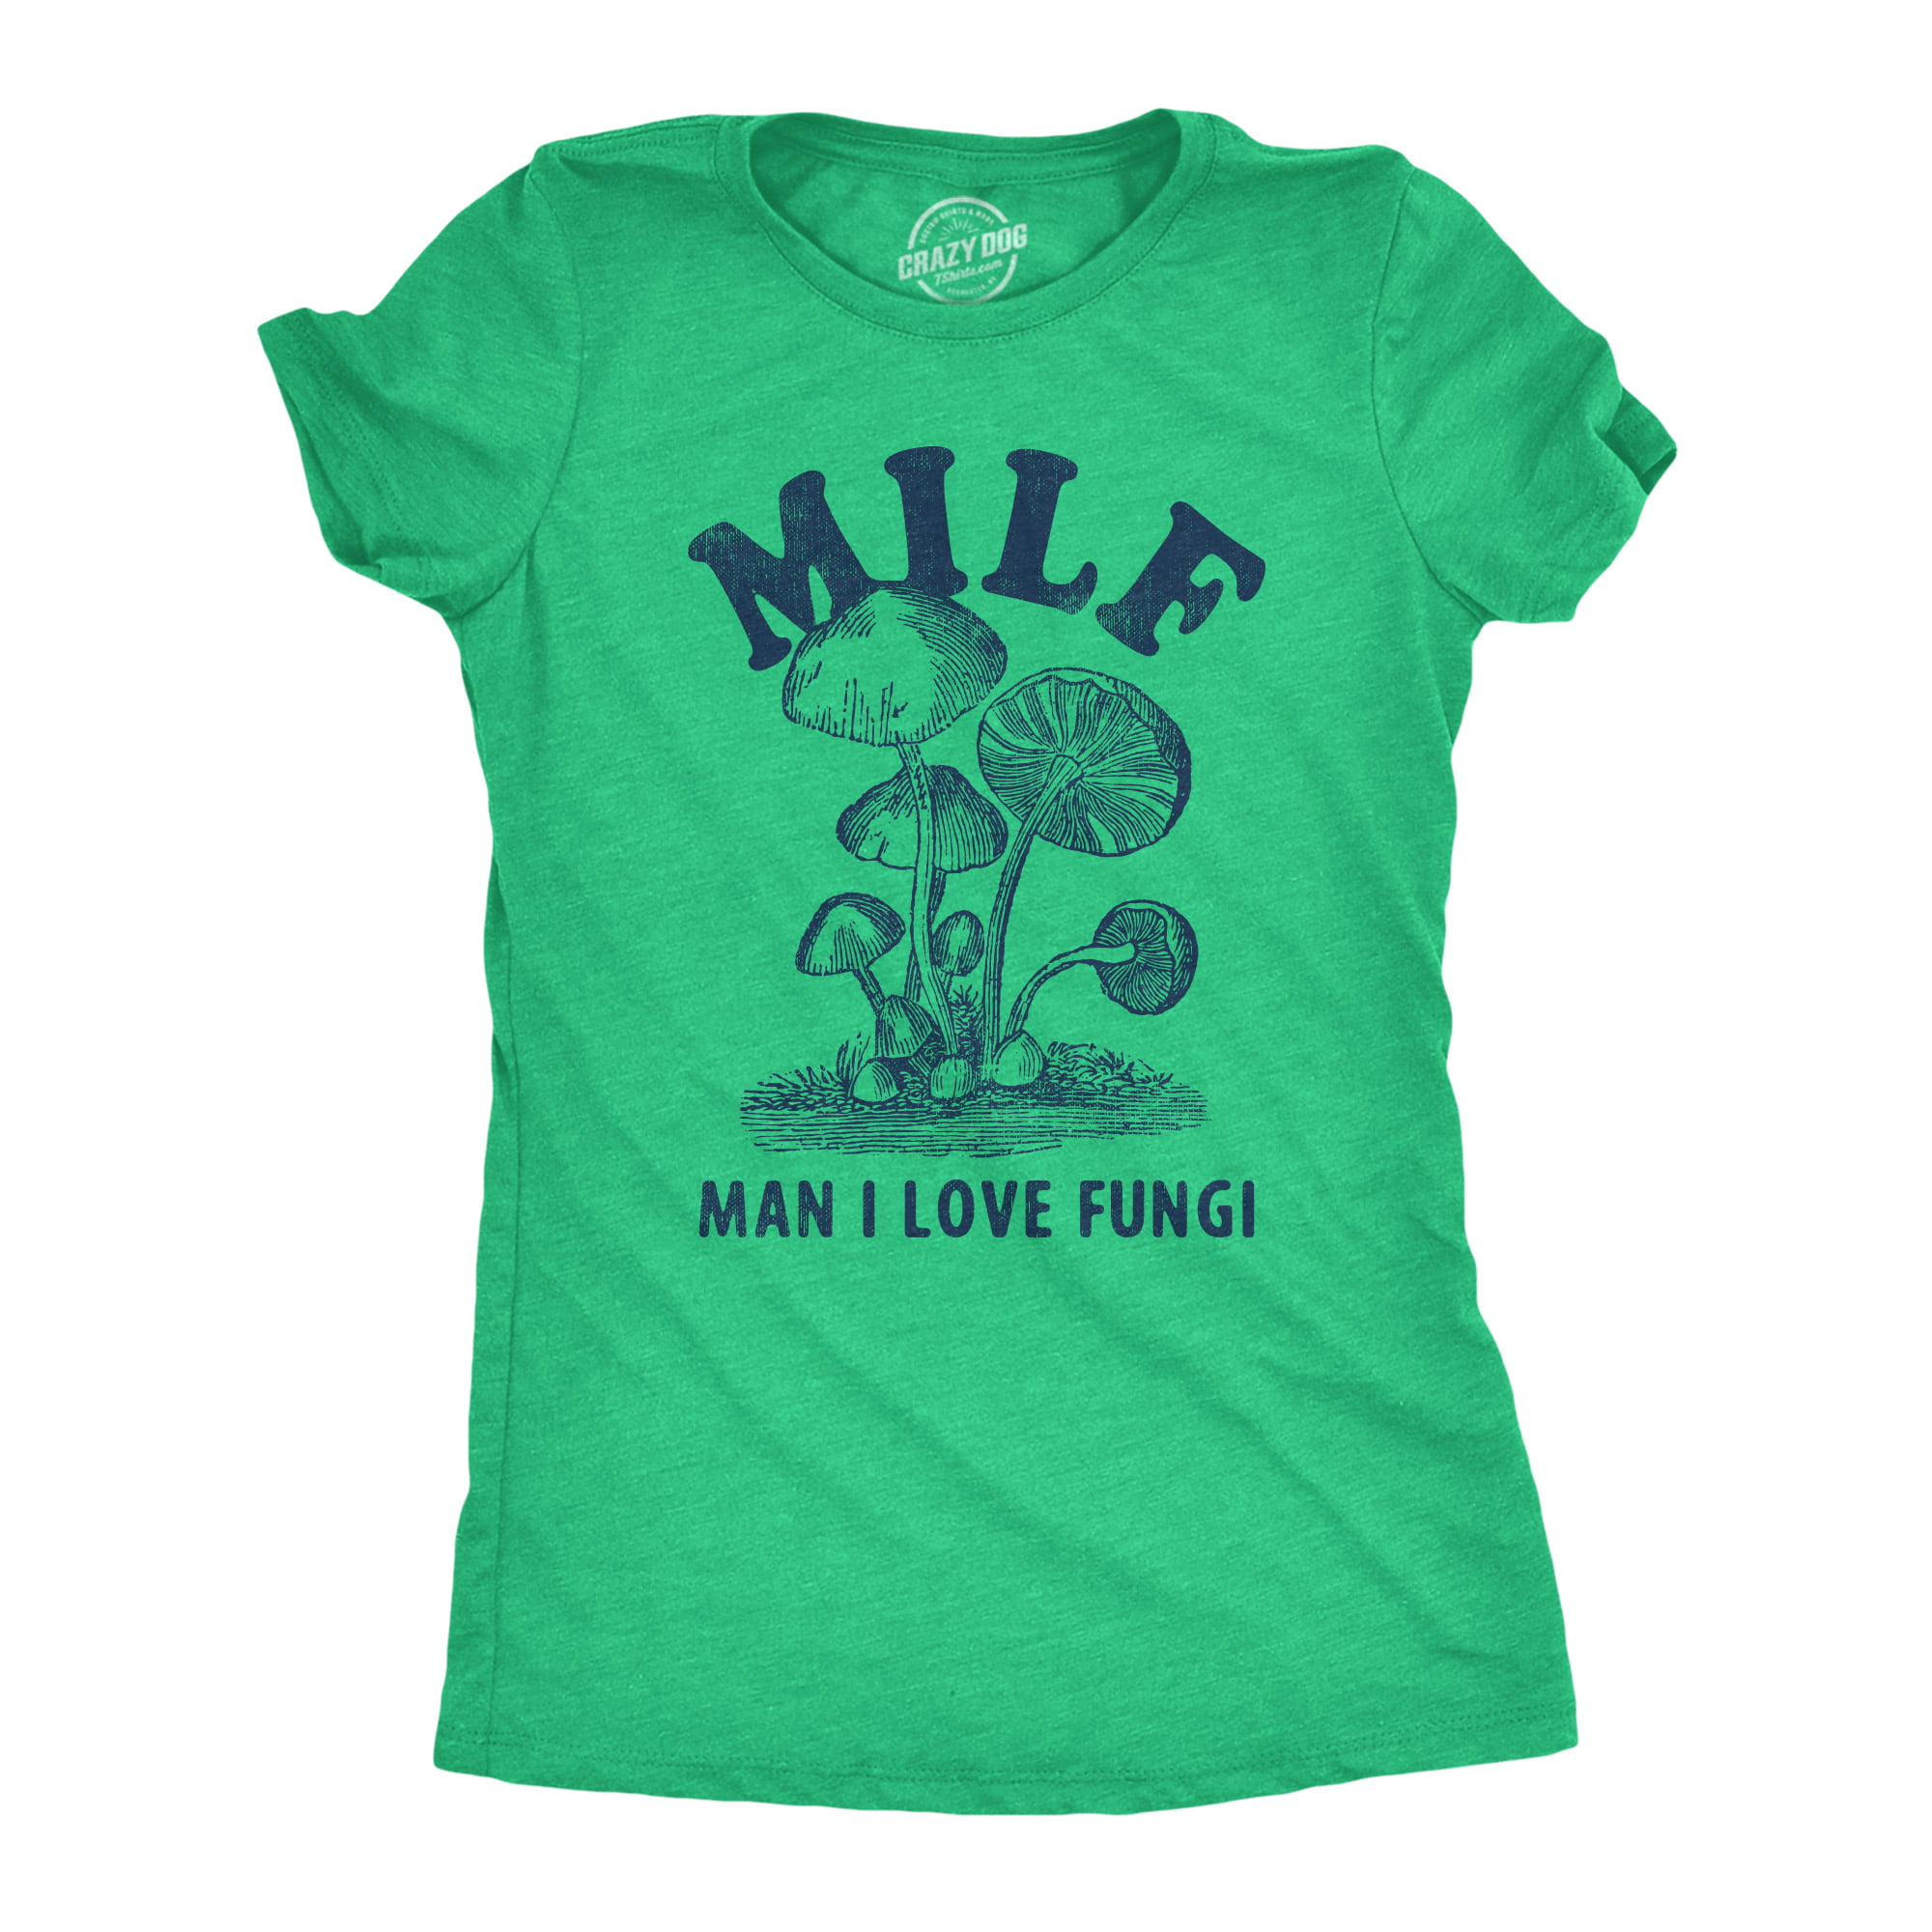  MILF Man I Love Fitness Funny T-Shirt : Clothing